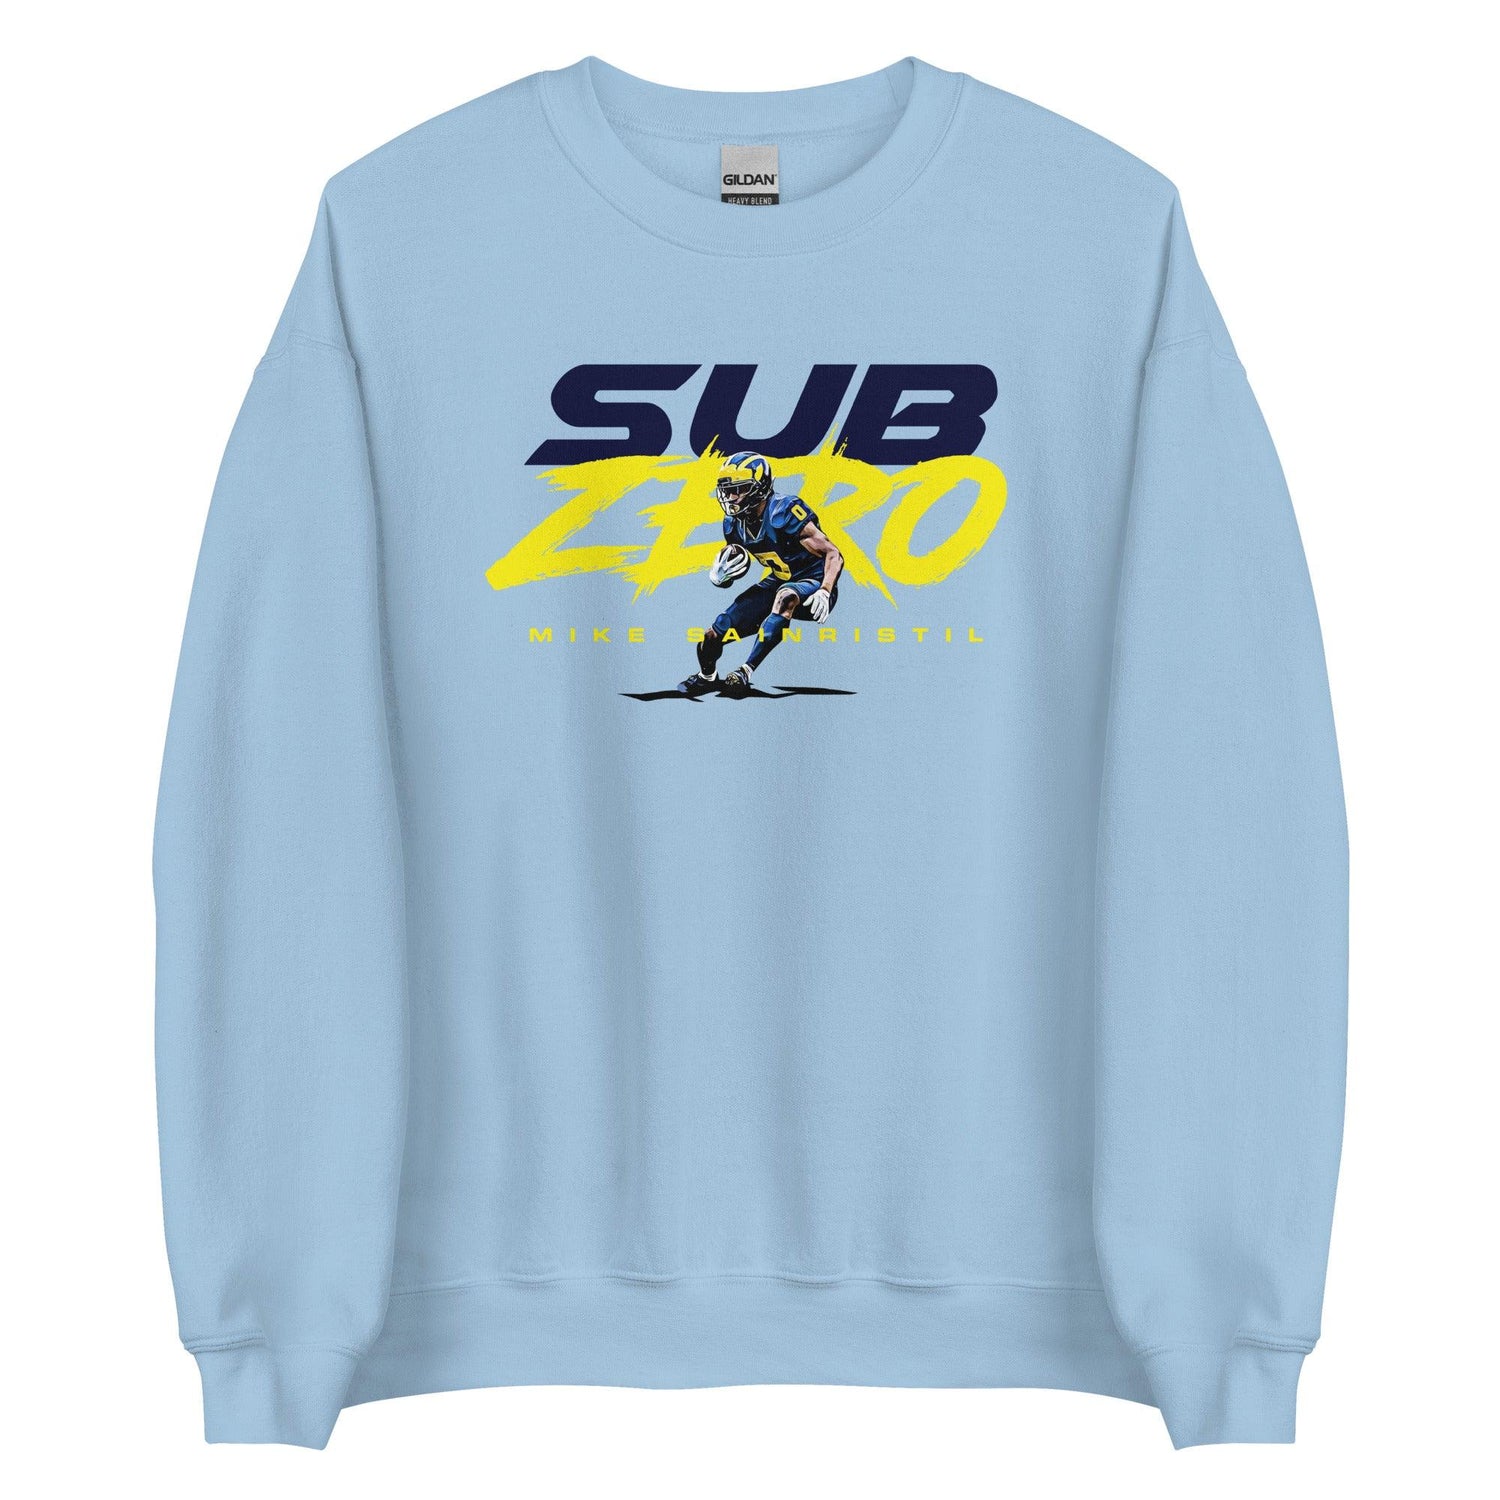 Mike Sainristil "Sub Zero" Sweatshirt - Fan Arch